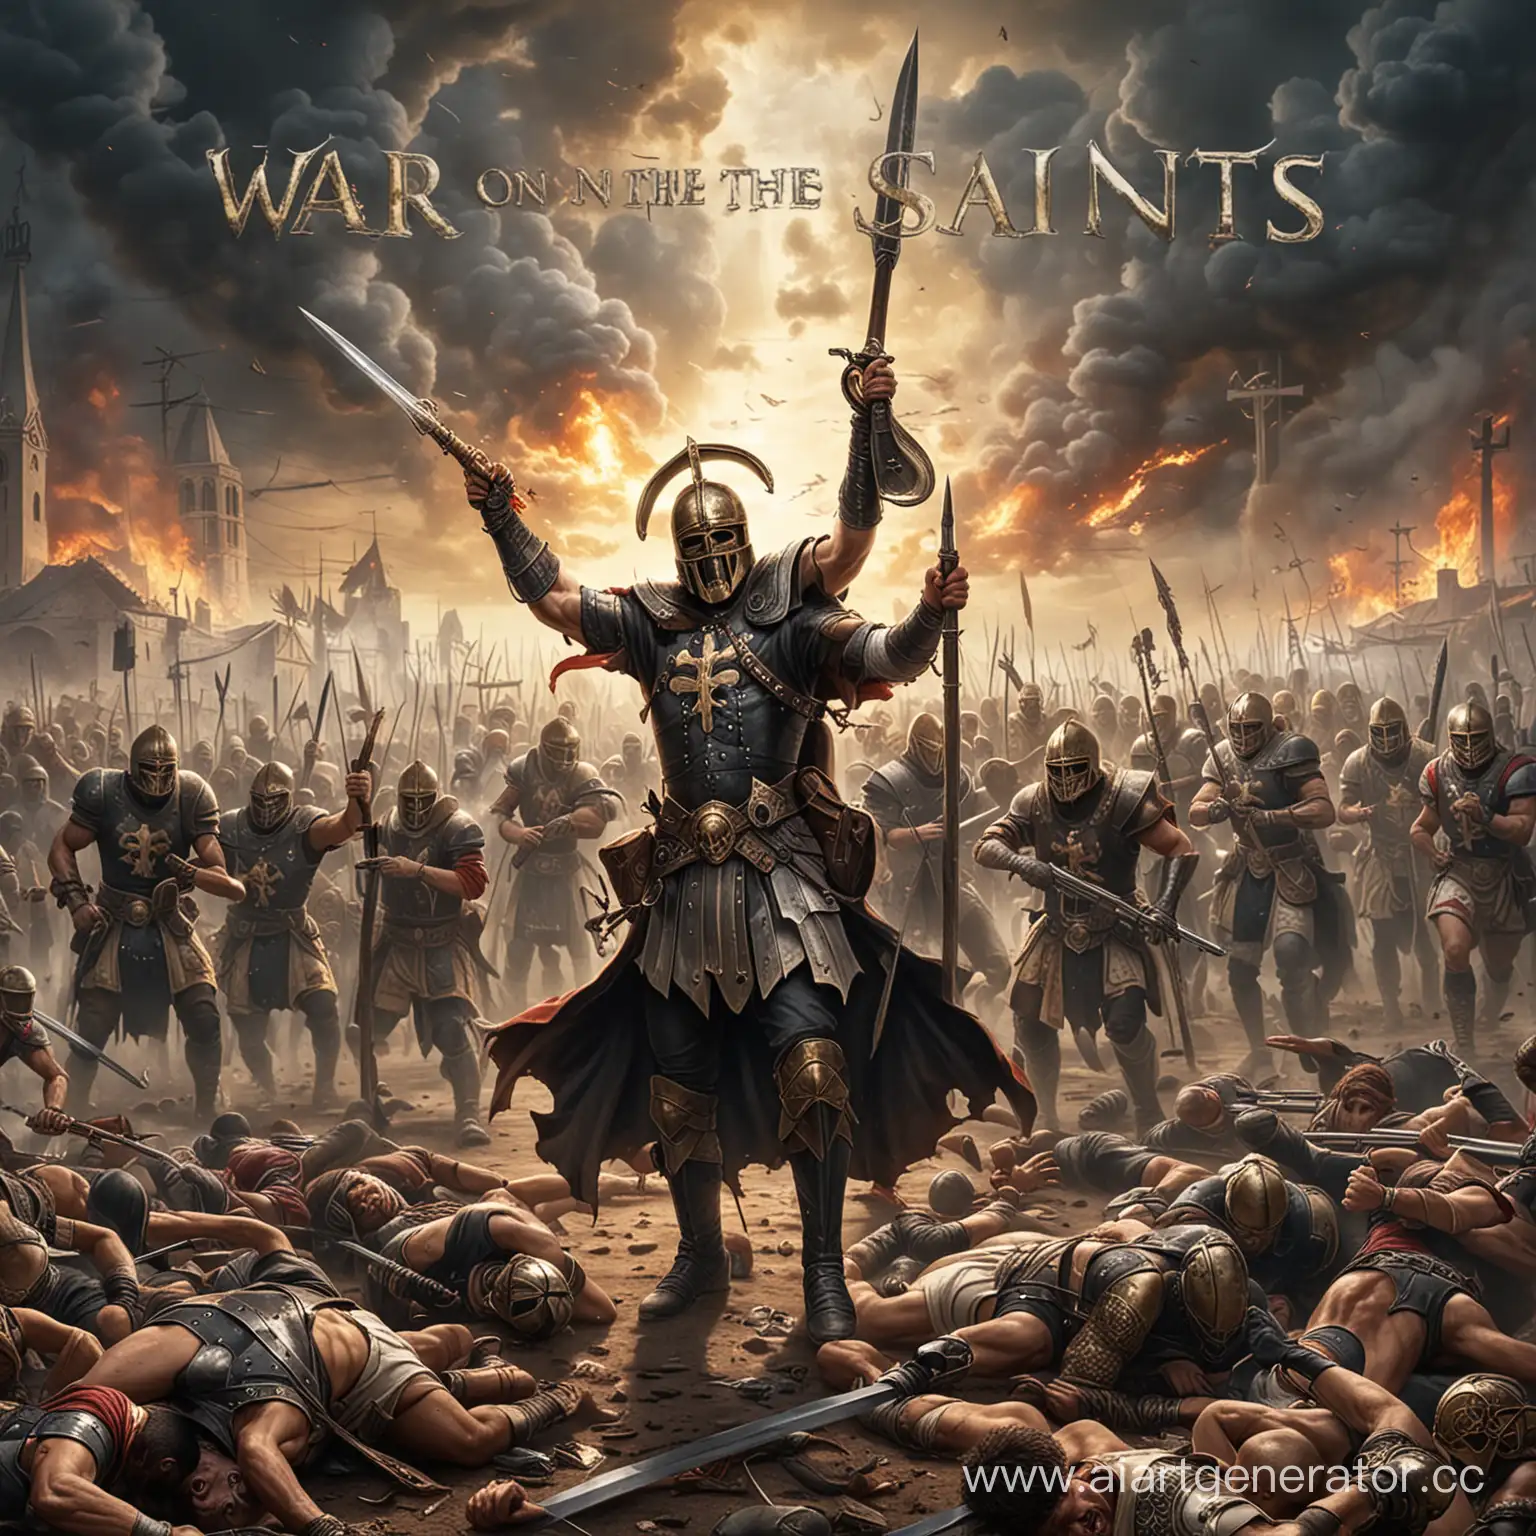 War on the saints